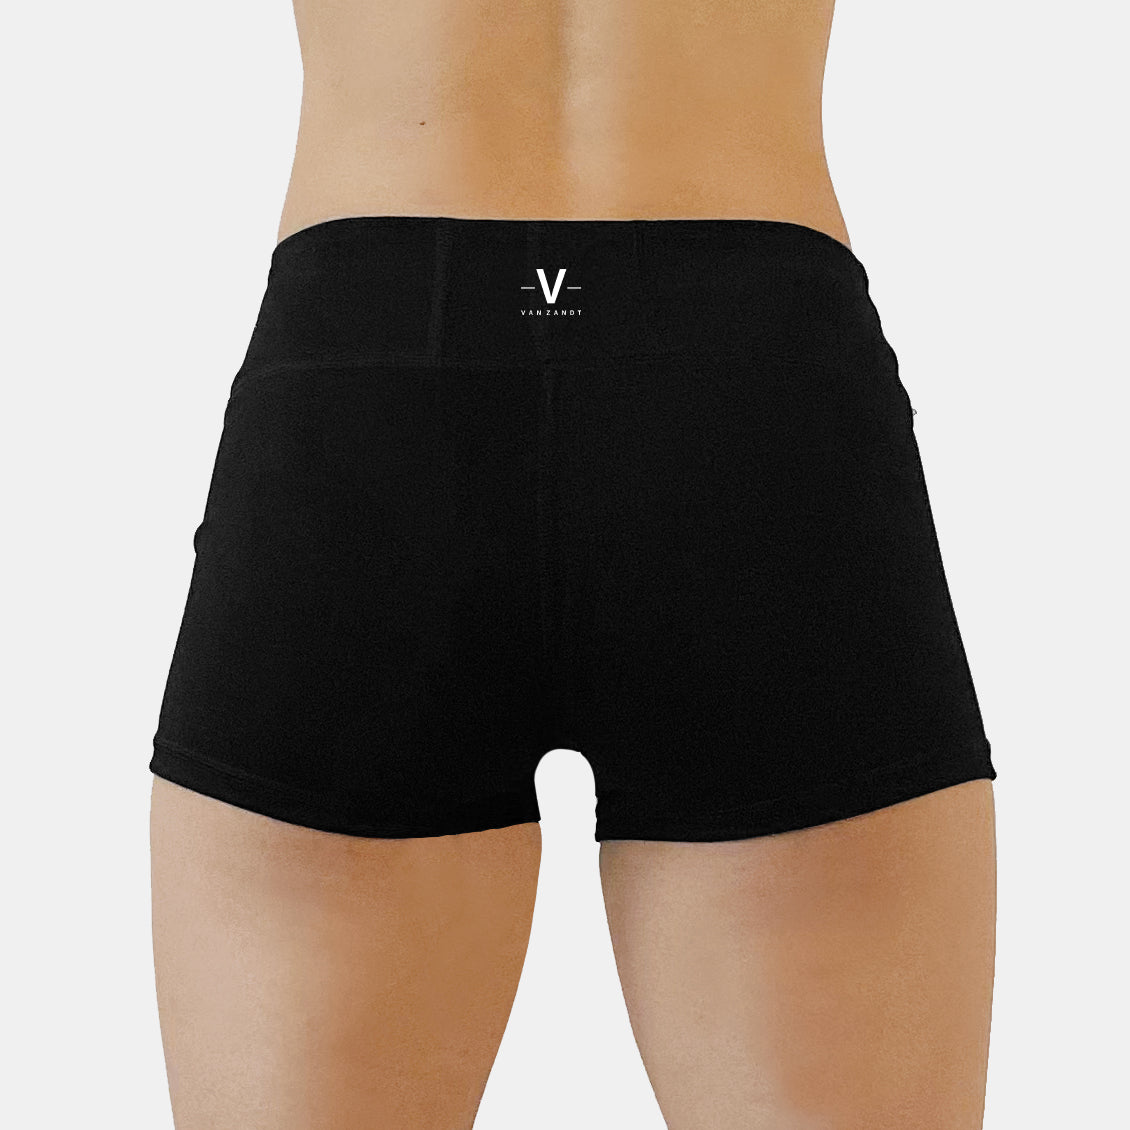 Vitality High Rise Compression Shorts Black - VAN ZANDT APPAREL